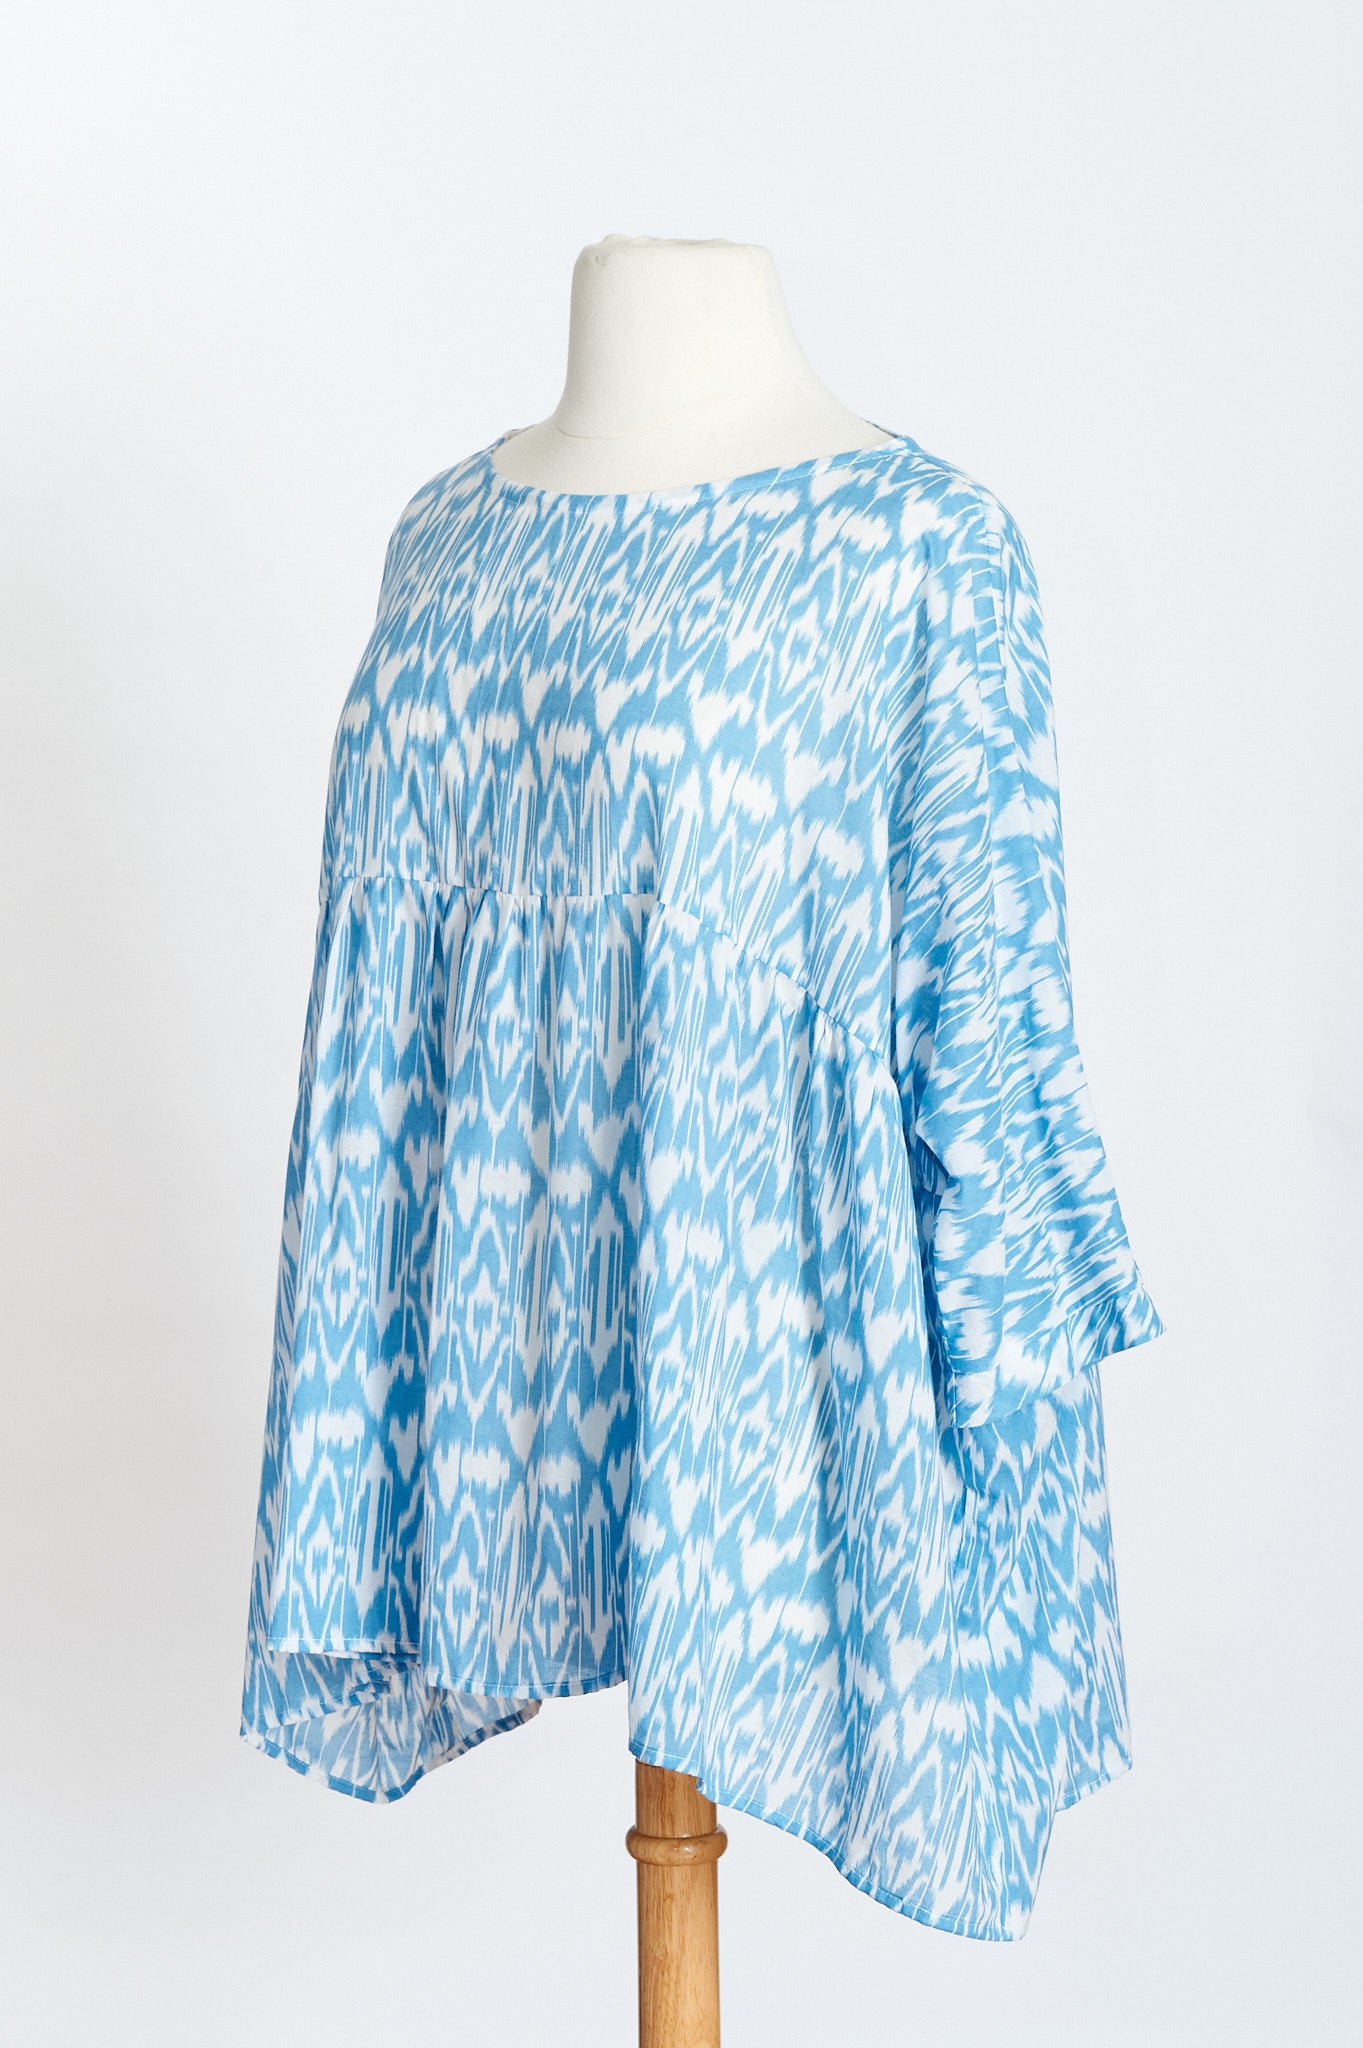 Nicola Short : Blue & White Indian Cotton